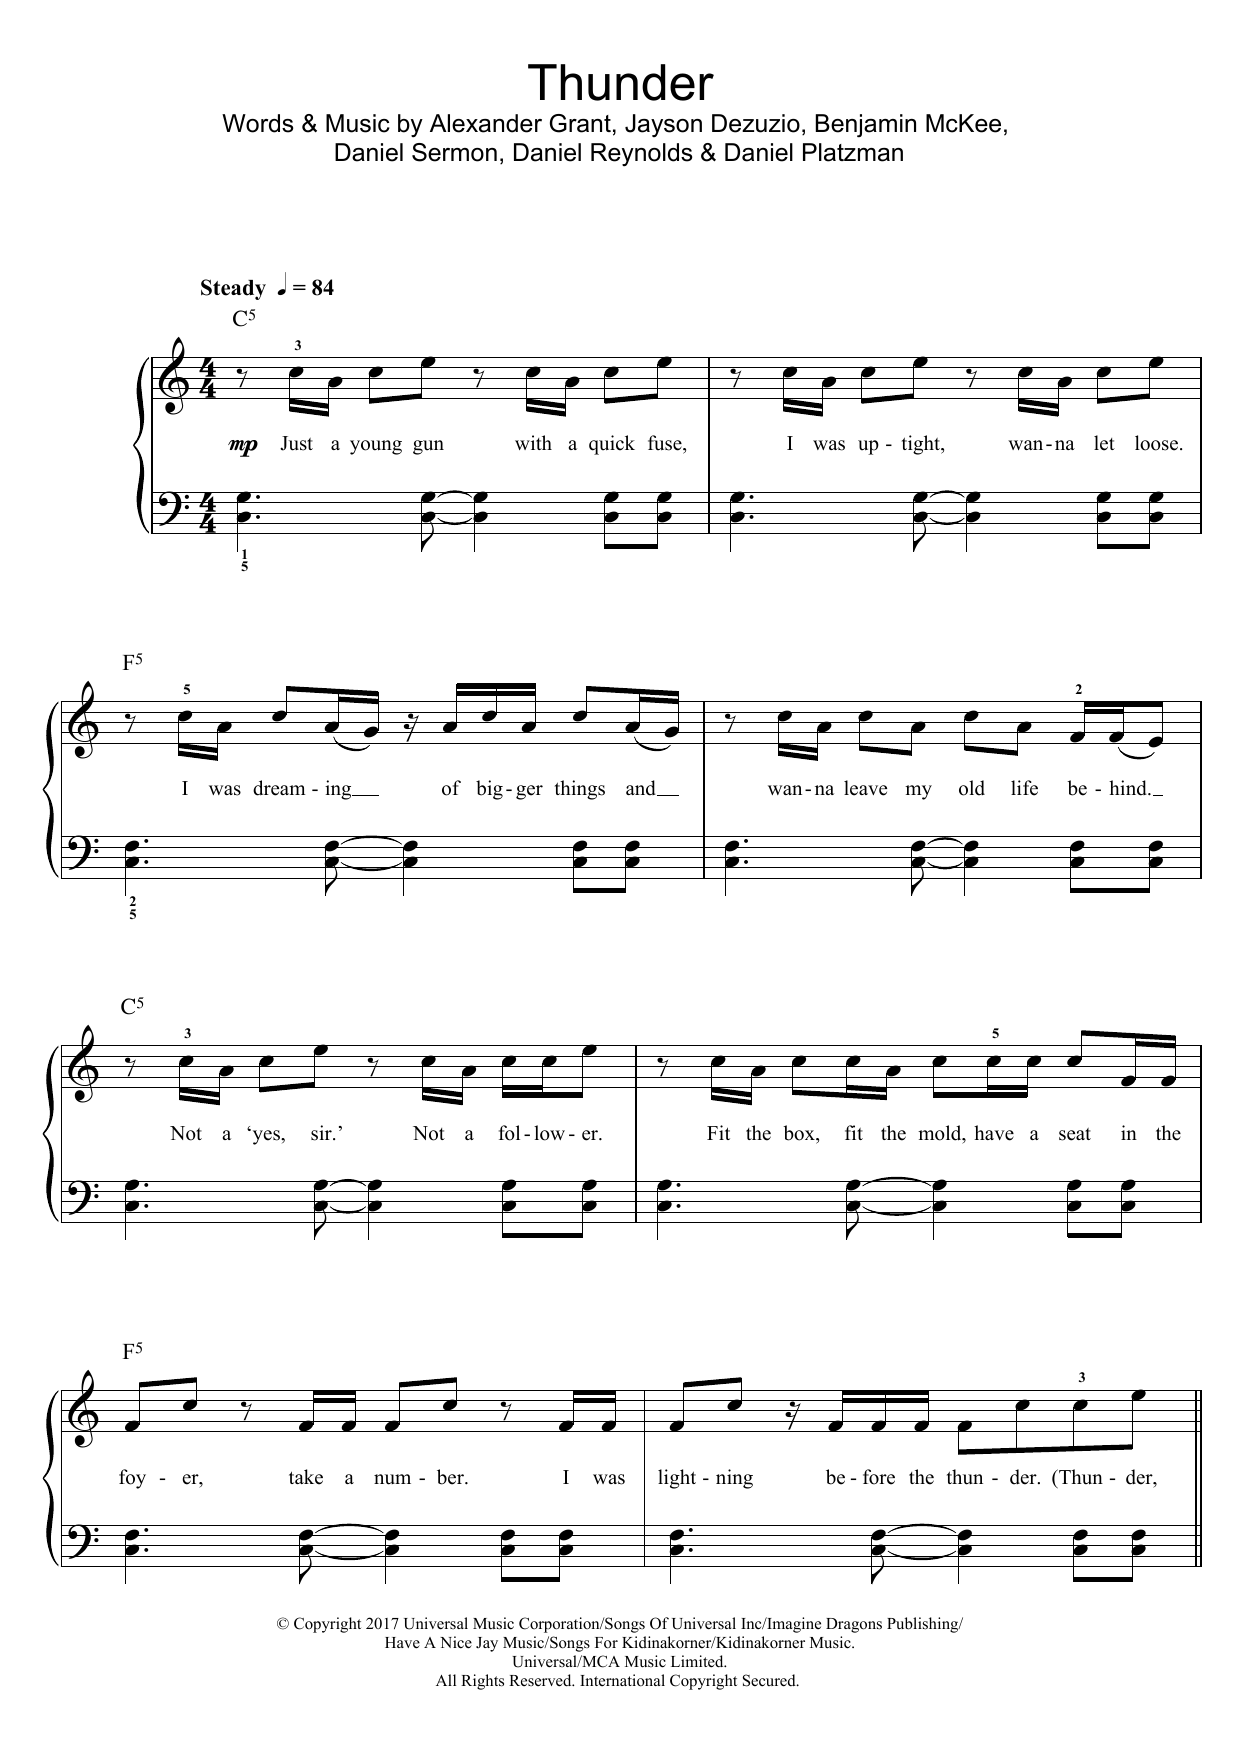 Imagine Dragons Thunder sheet music notes and chords arranged for Guitar Chords/Lyrics